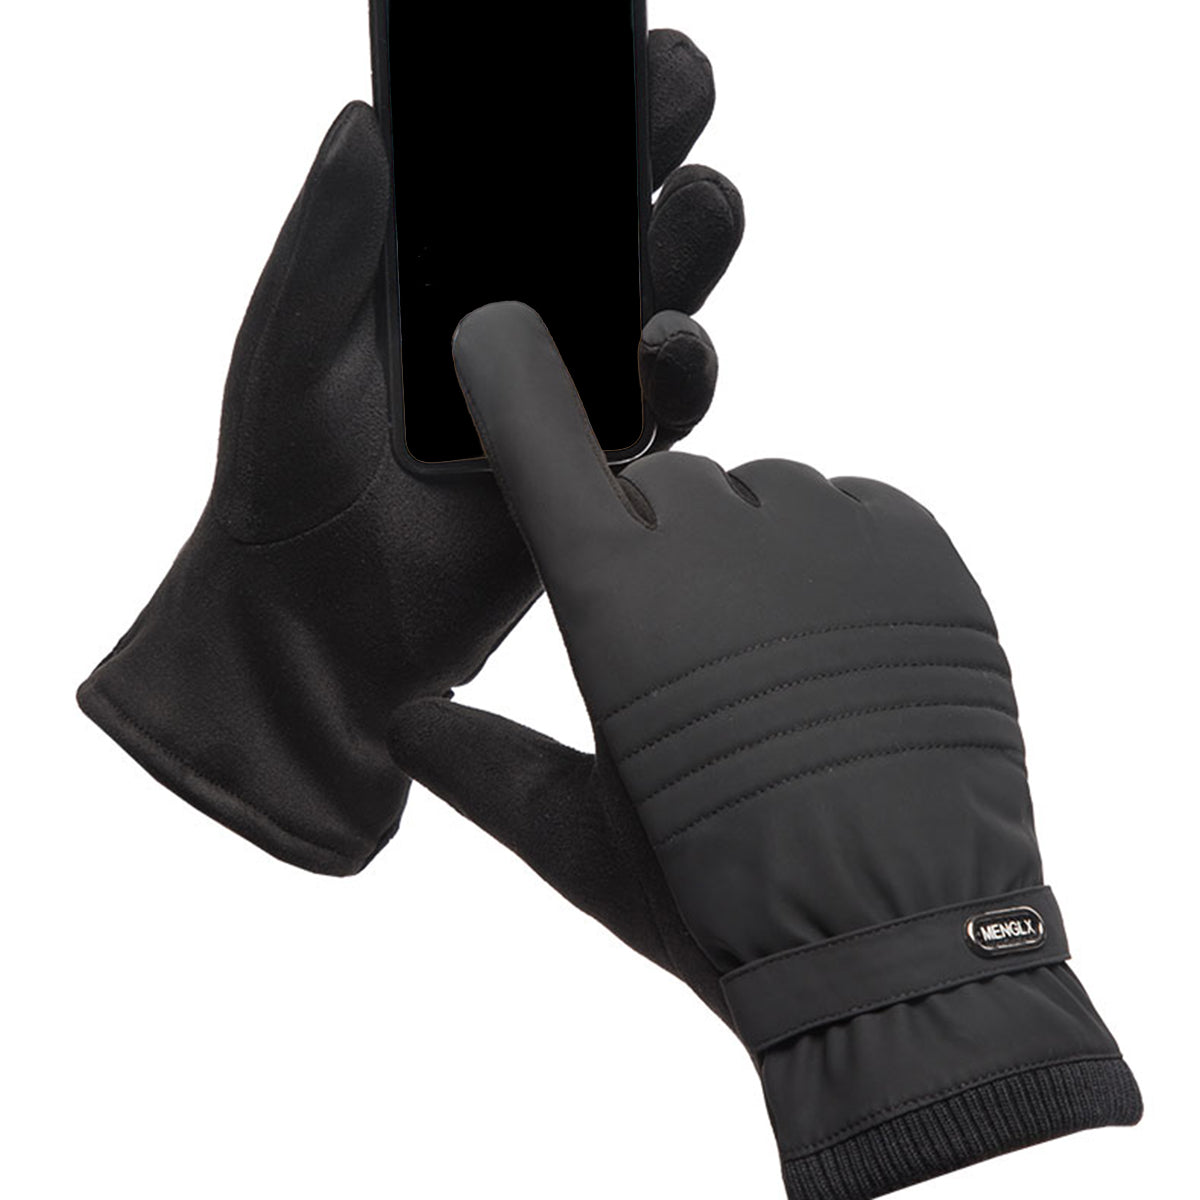 -15 ° touchscreen winddicht waterdicht outdoor sport handschoenen winterhandschoenen thermisch